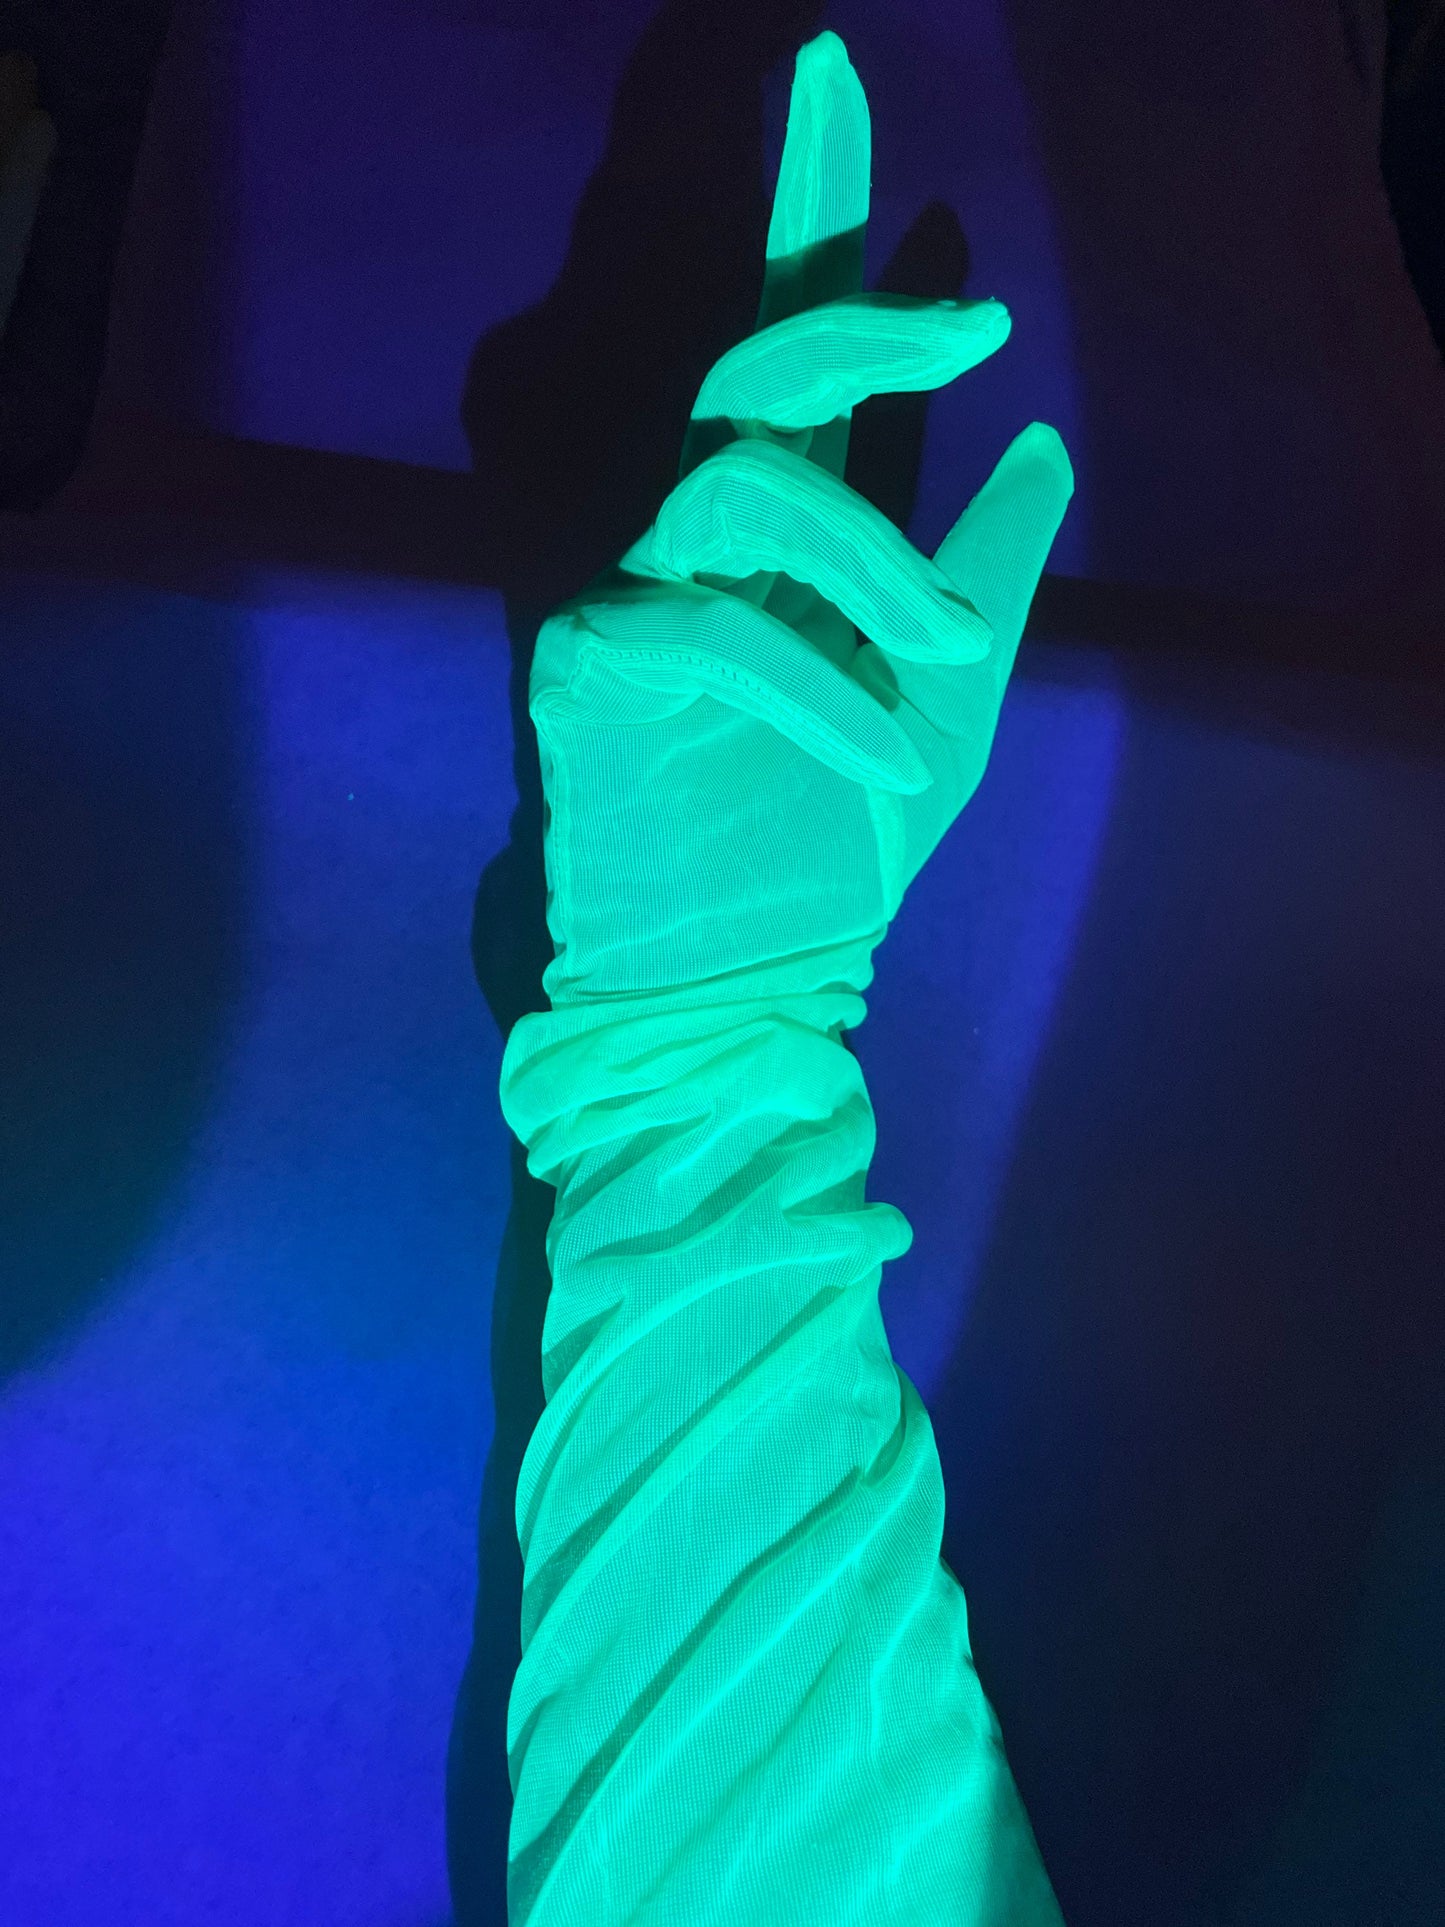 Neon green UV reactive glow in the dark fluorescent gloves.